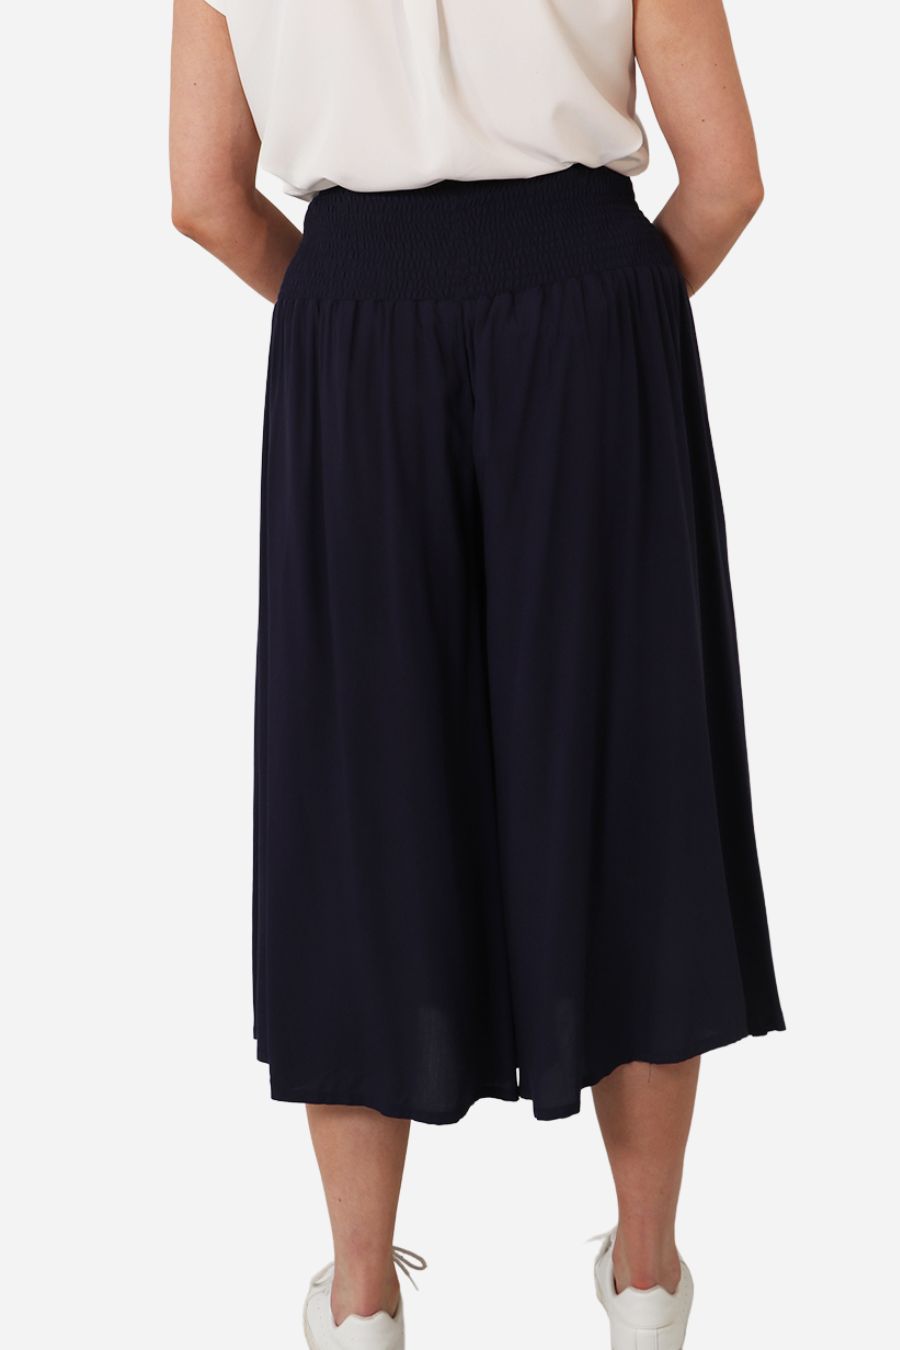 Navy Blue Plain Elasticated Waist Culottes with Pockets - Allison's Boutique